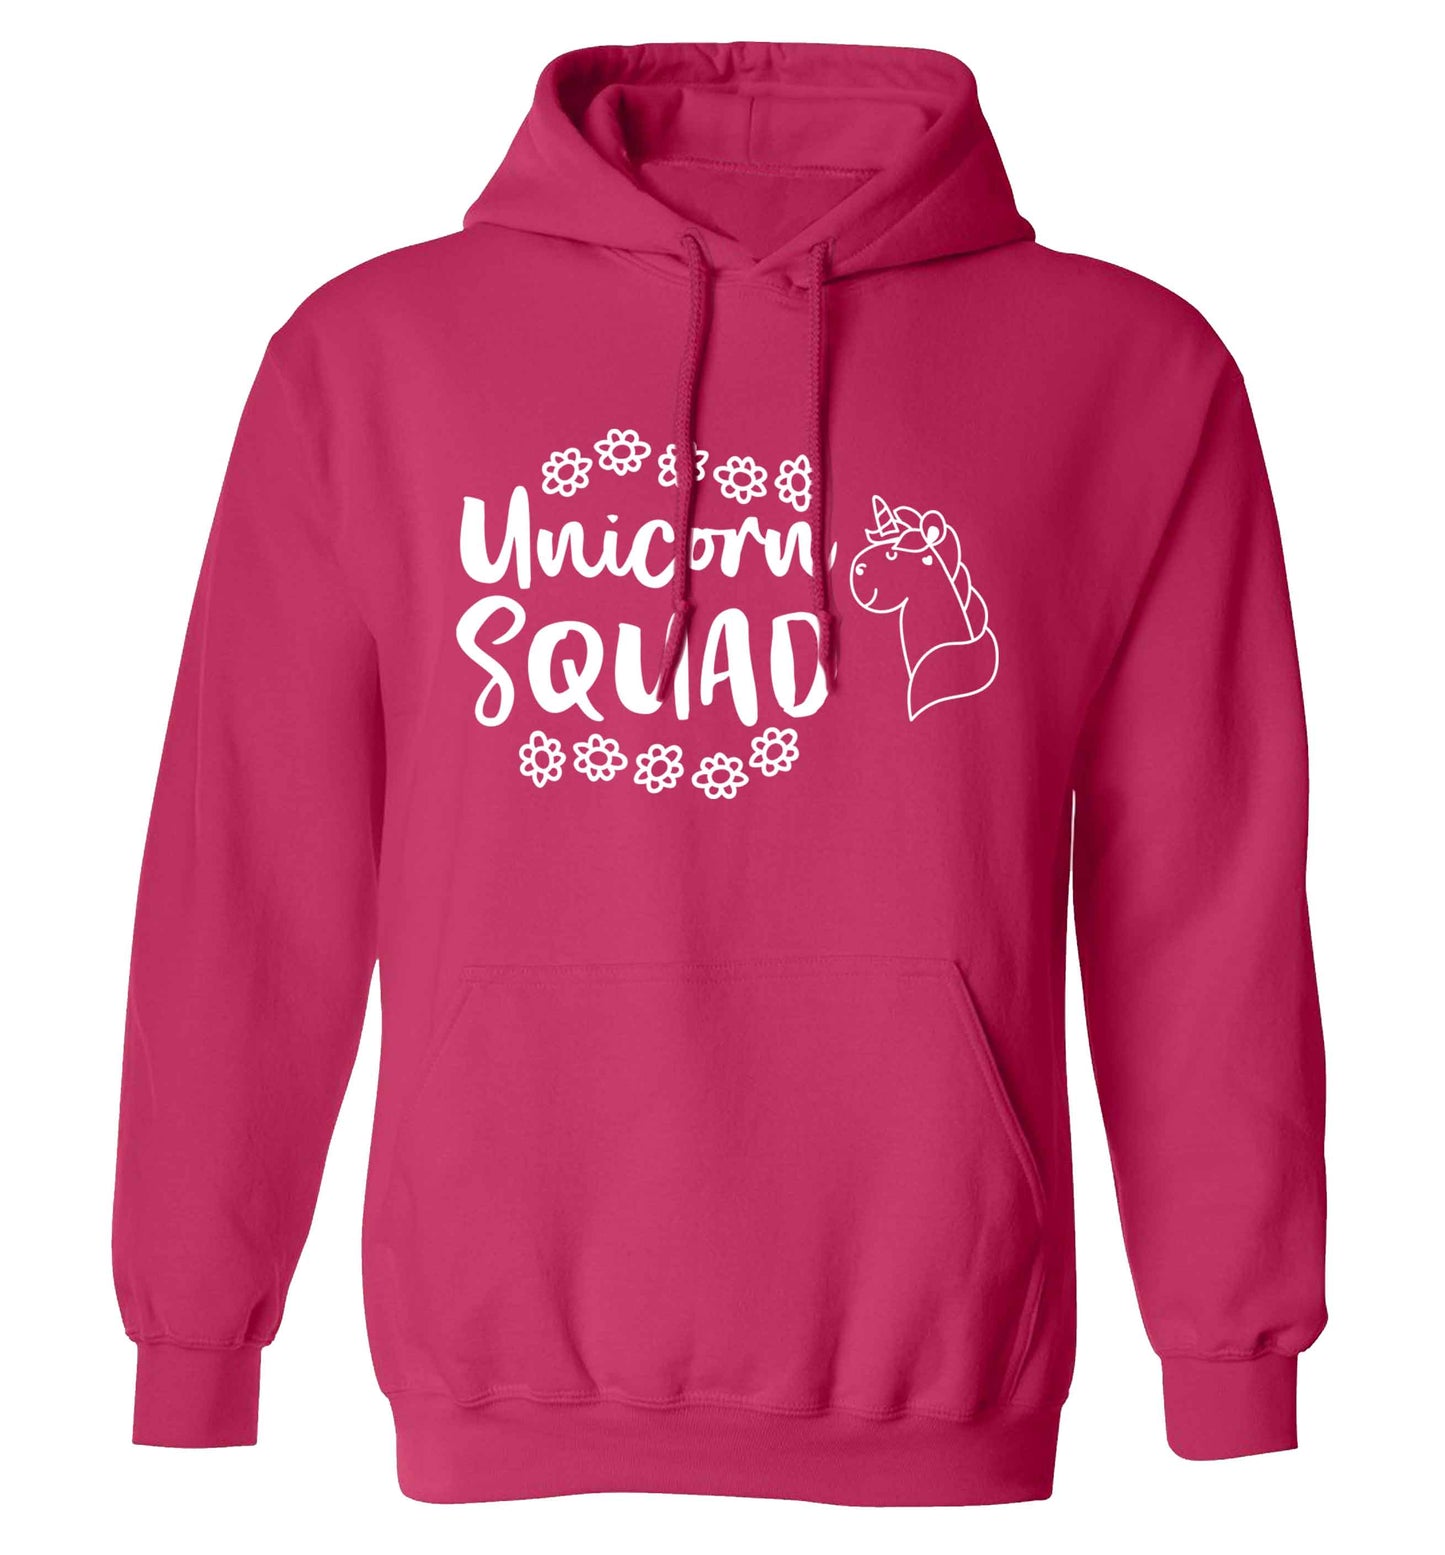 Unicorn Squad adults unisex pink hoodie 2XL